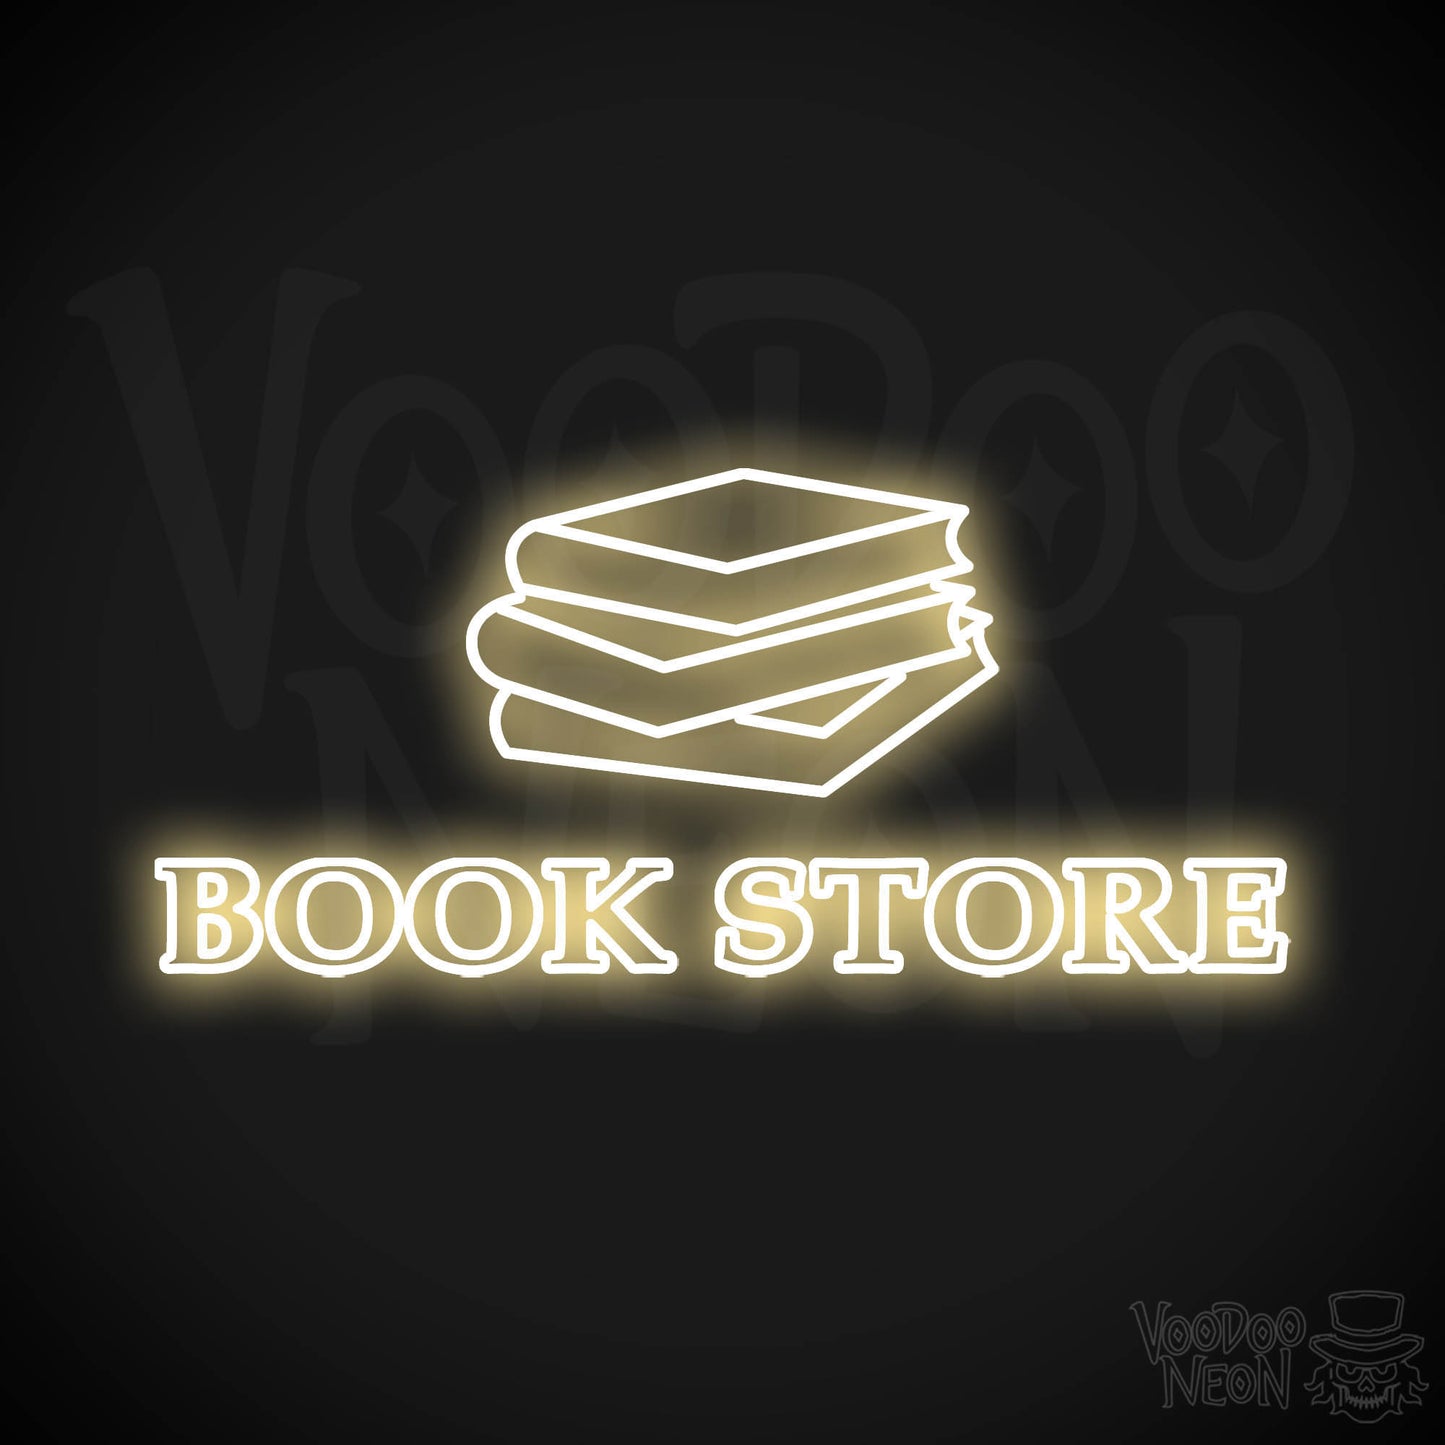 Book Store LED Neon - Warm White